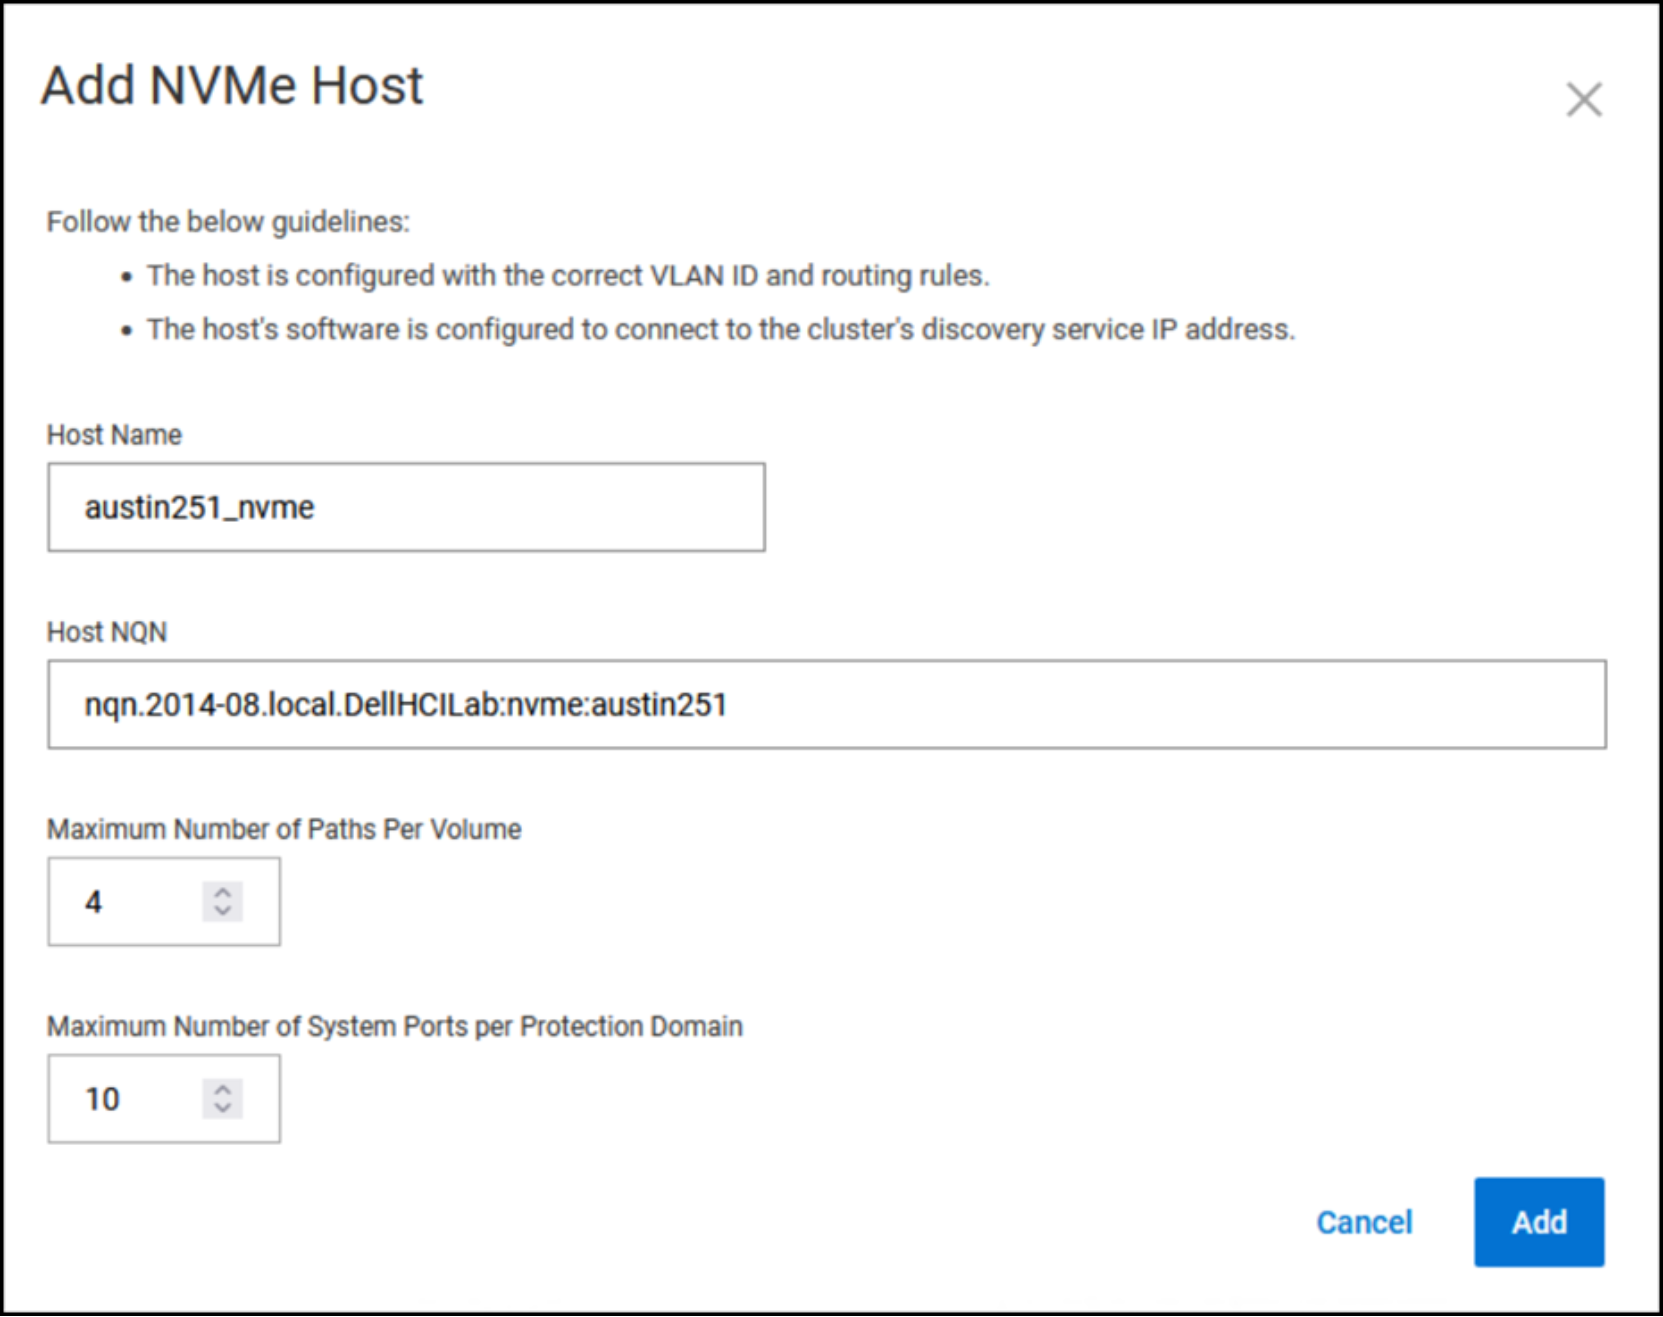 Add NVMe host – Step 2